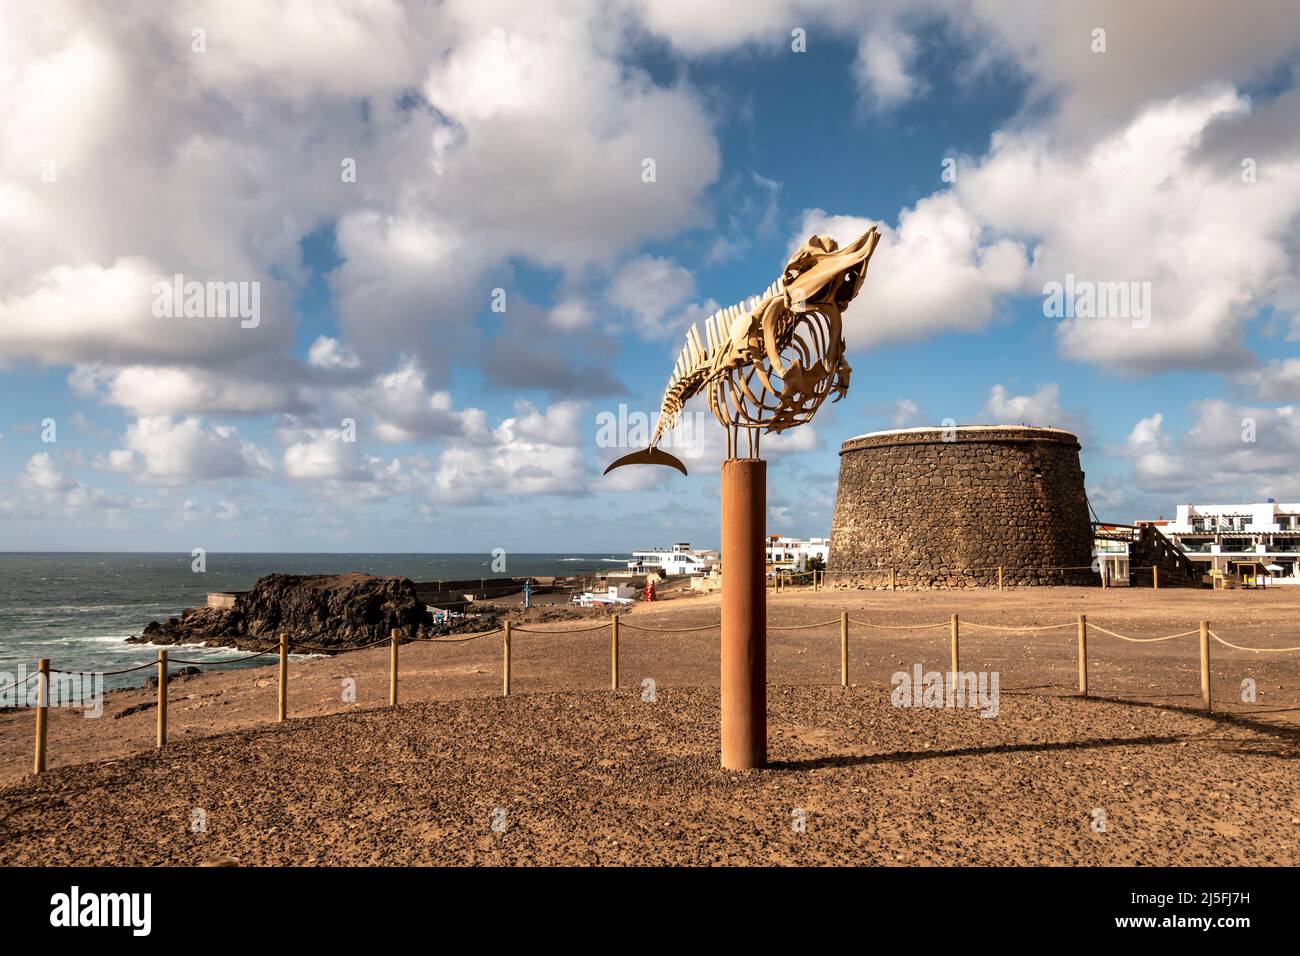 El Cotillo, Castillo del Toston, Wehrturm, Fortaleza del Toston, Skelett eines Schnabelwals, Ziphidae, Fuerteventura, Kanarische Inseln, Spanien, Euro Stock Photo